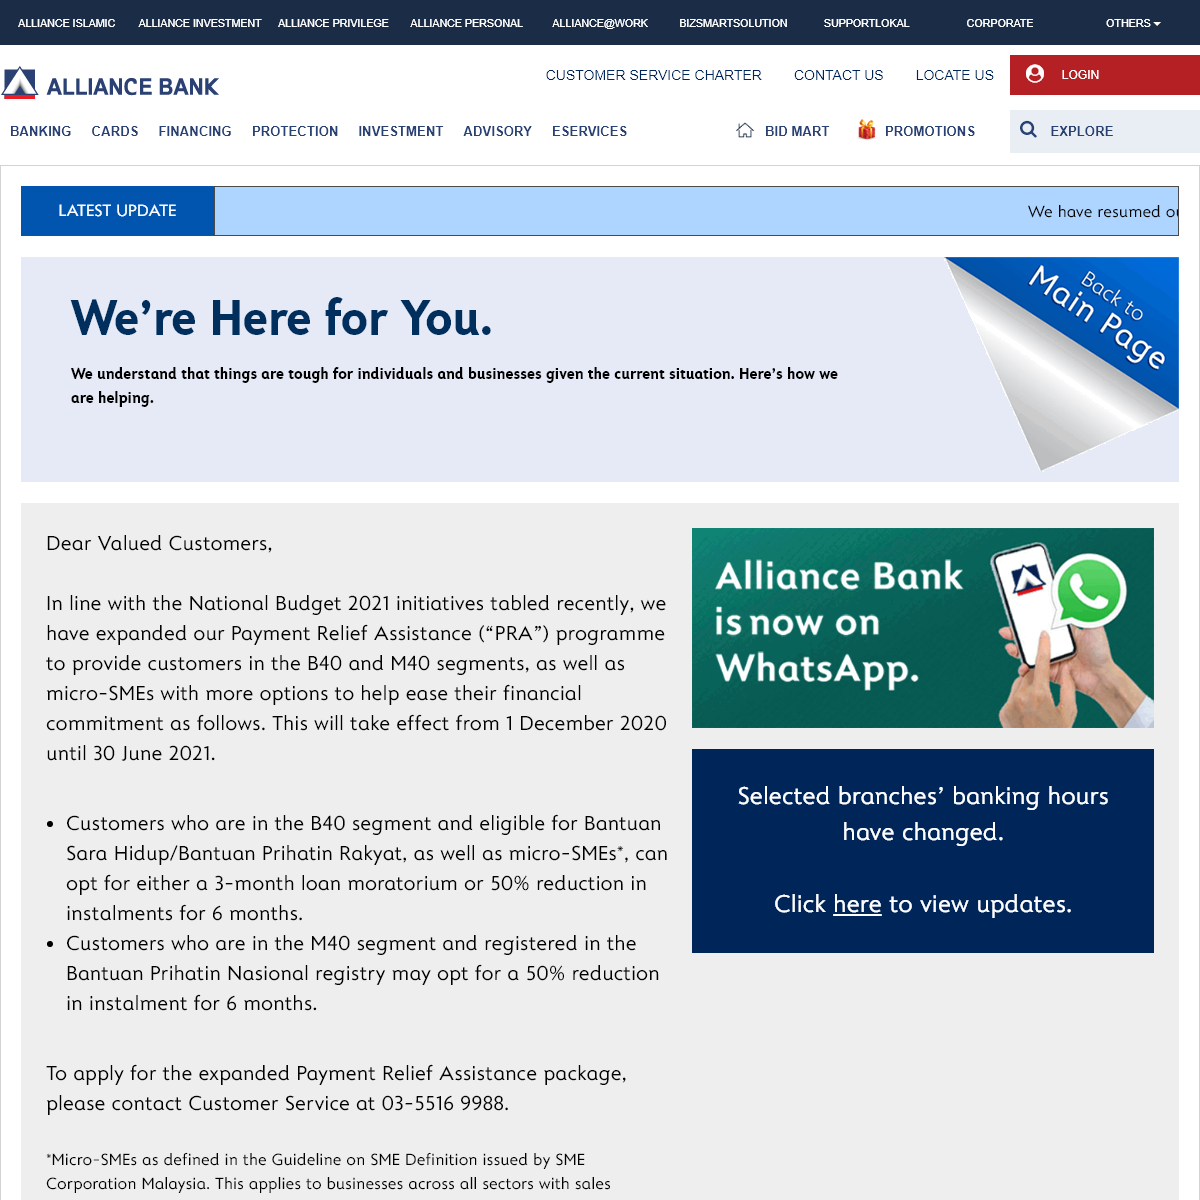 Best Digital Bank in Malaysia - Alliance Bank Malaysia